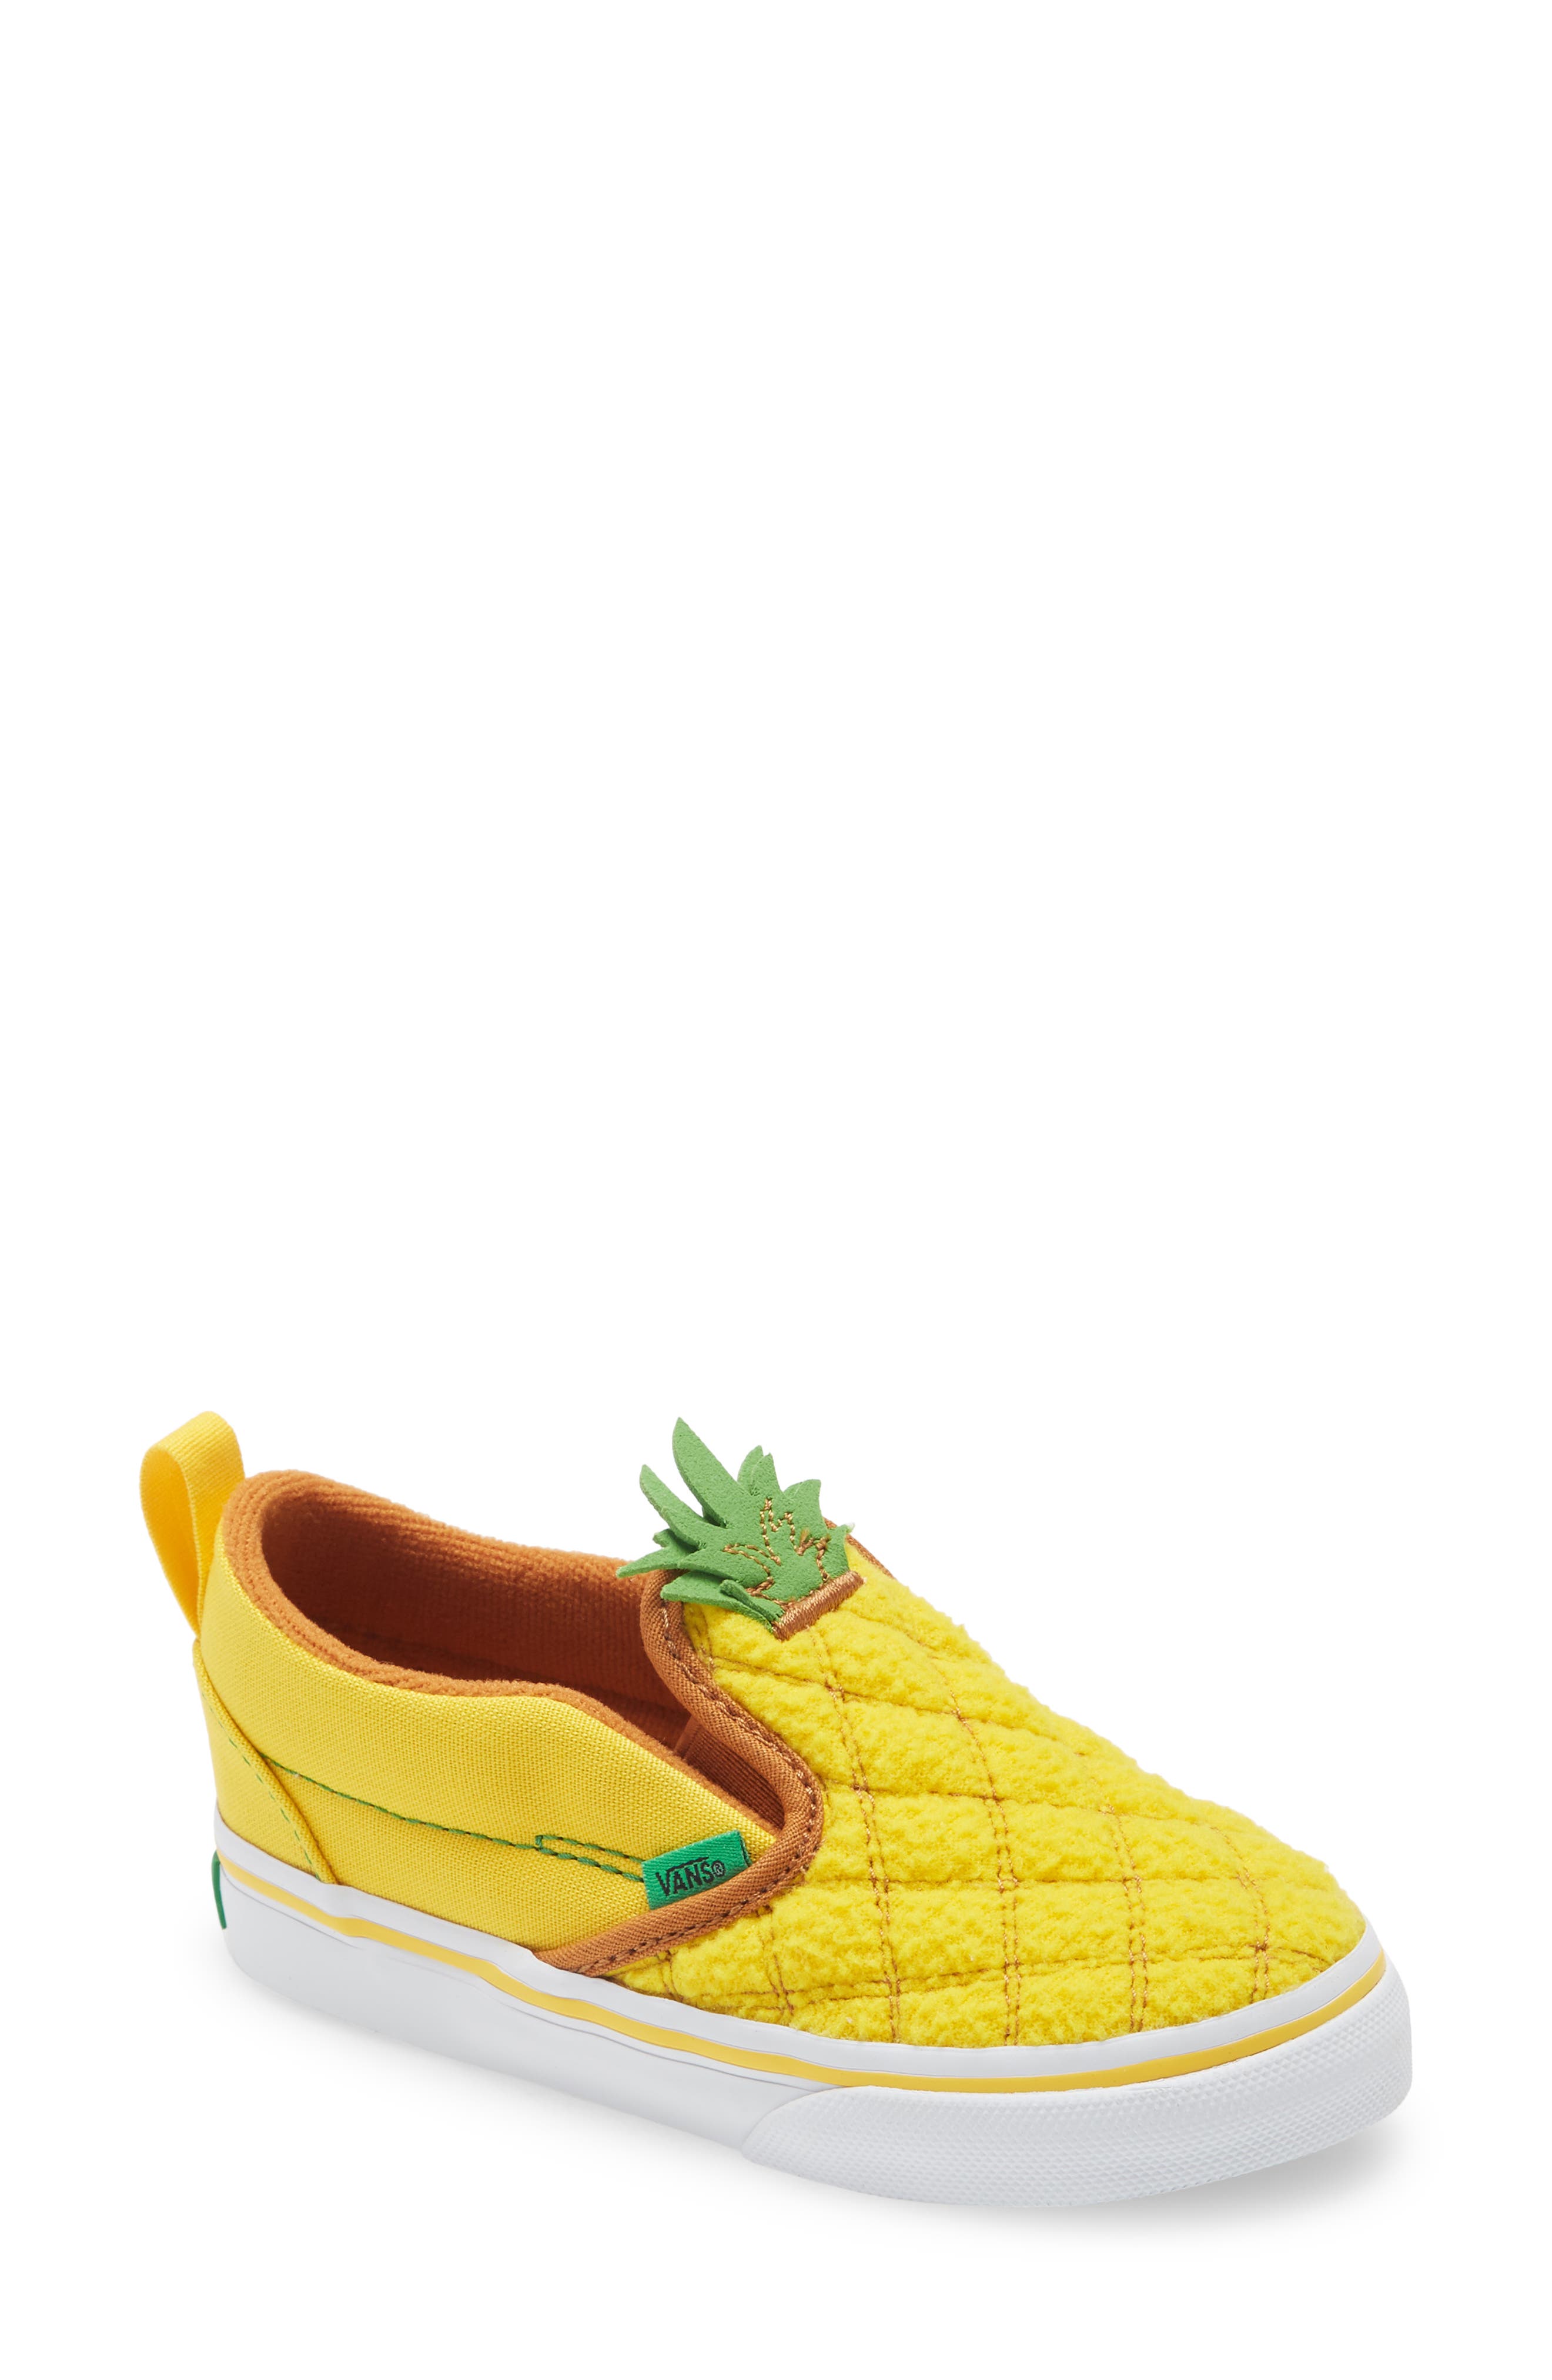 pineapple yellow vans